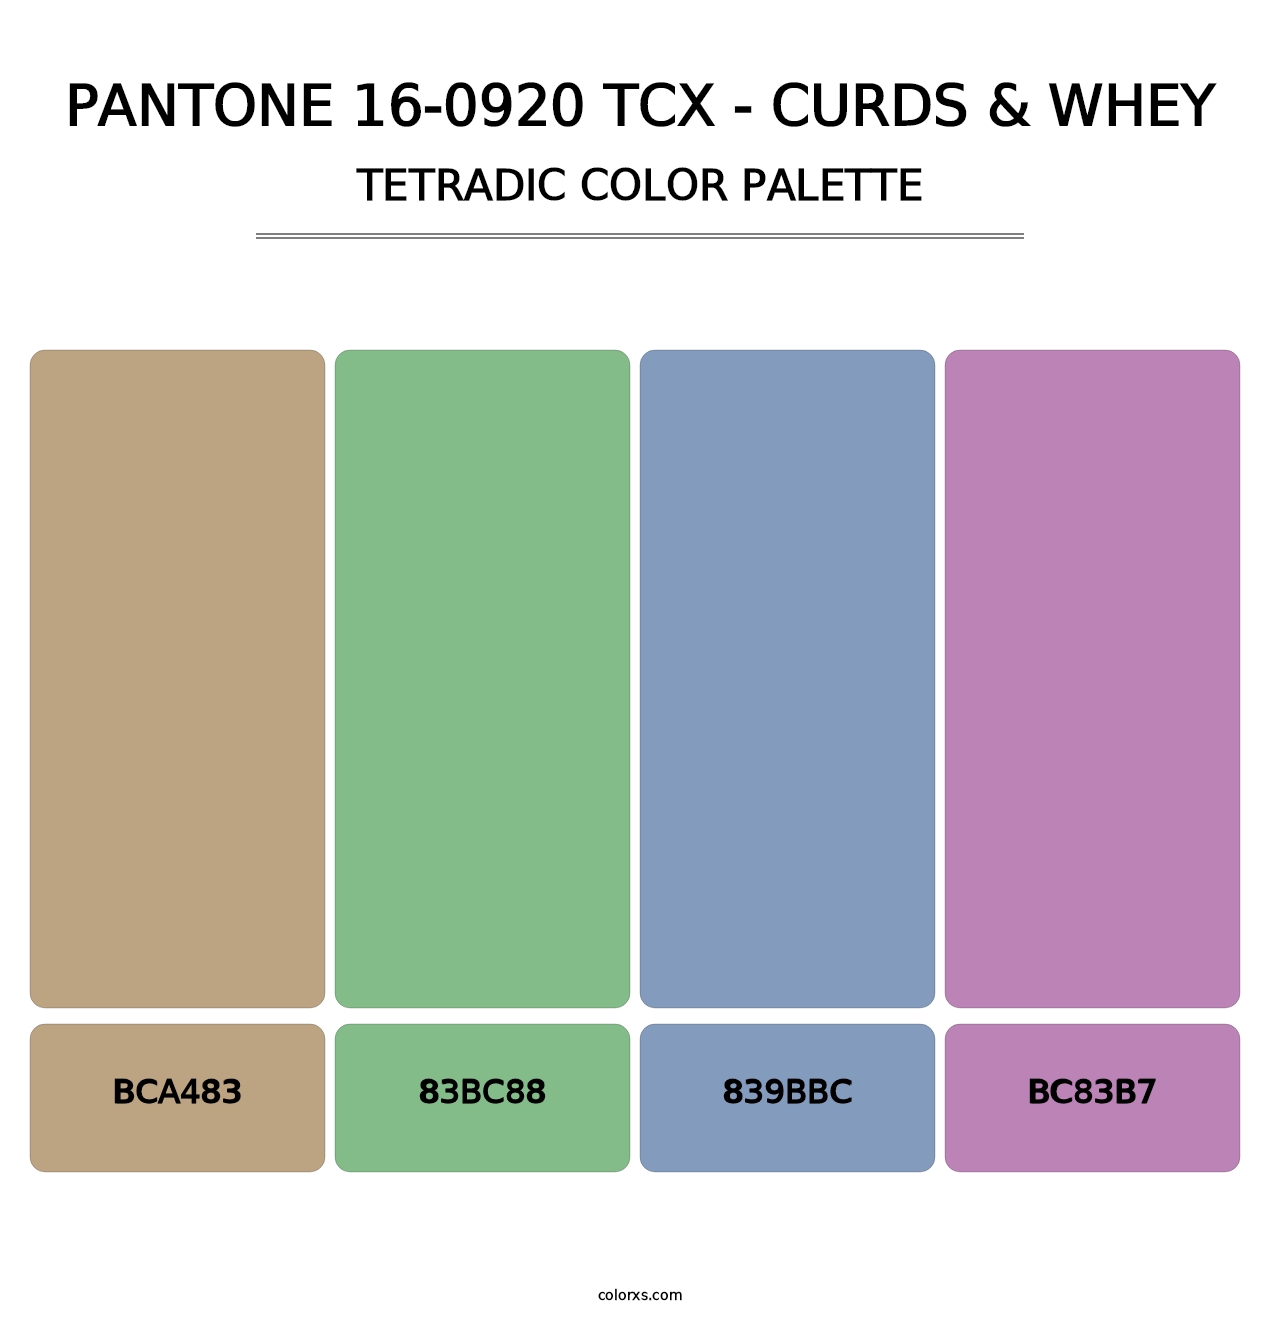 PANTONE 16-0920 TCX - Curds & Whey - Tetradic Color Palette